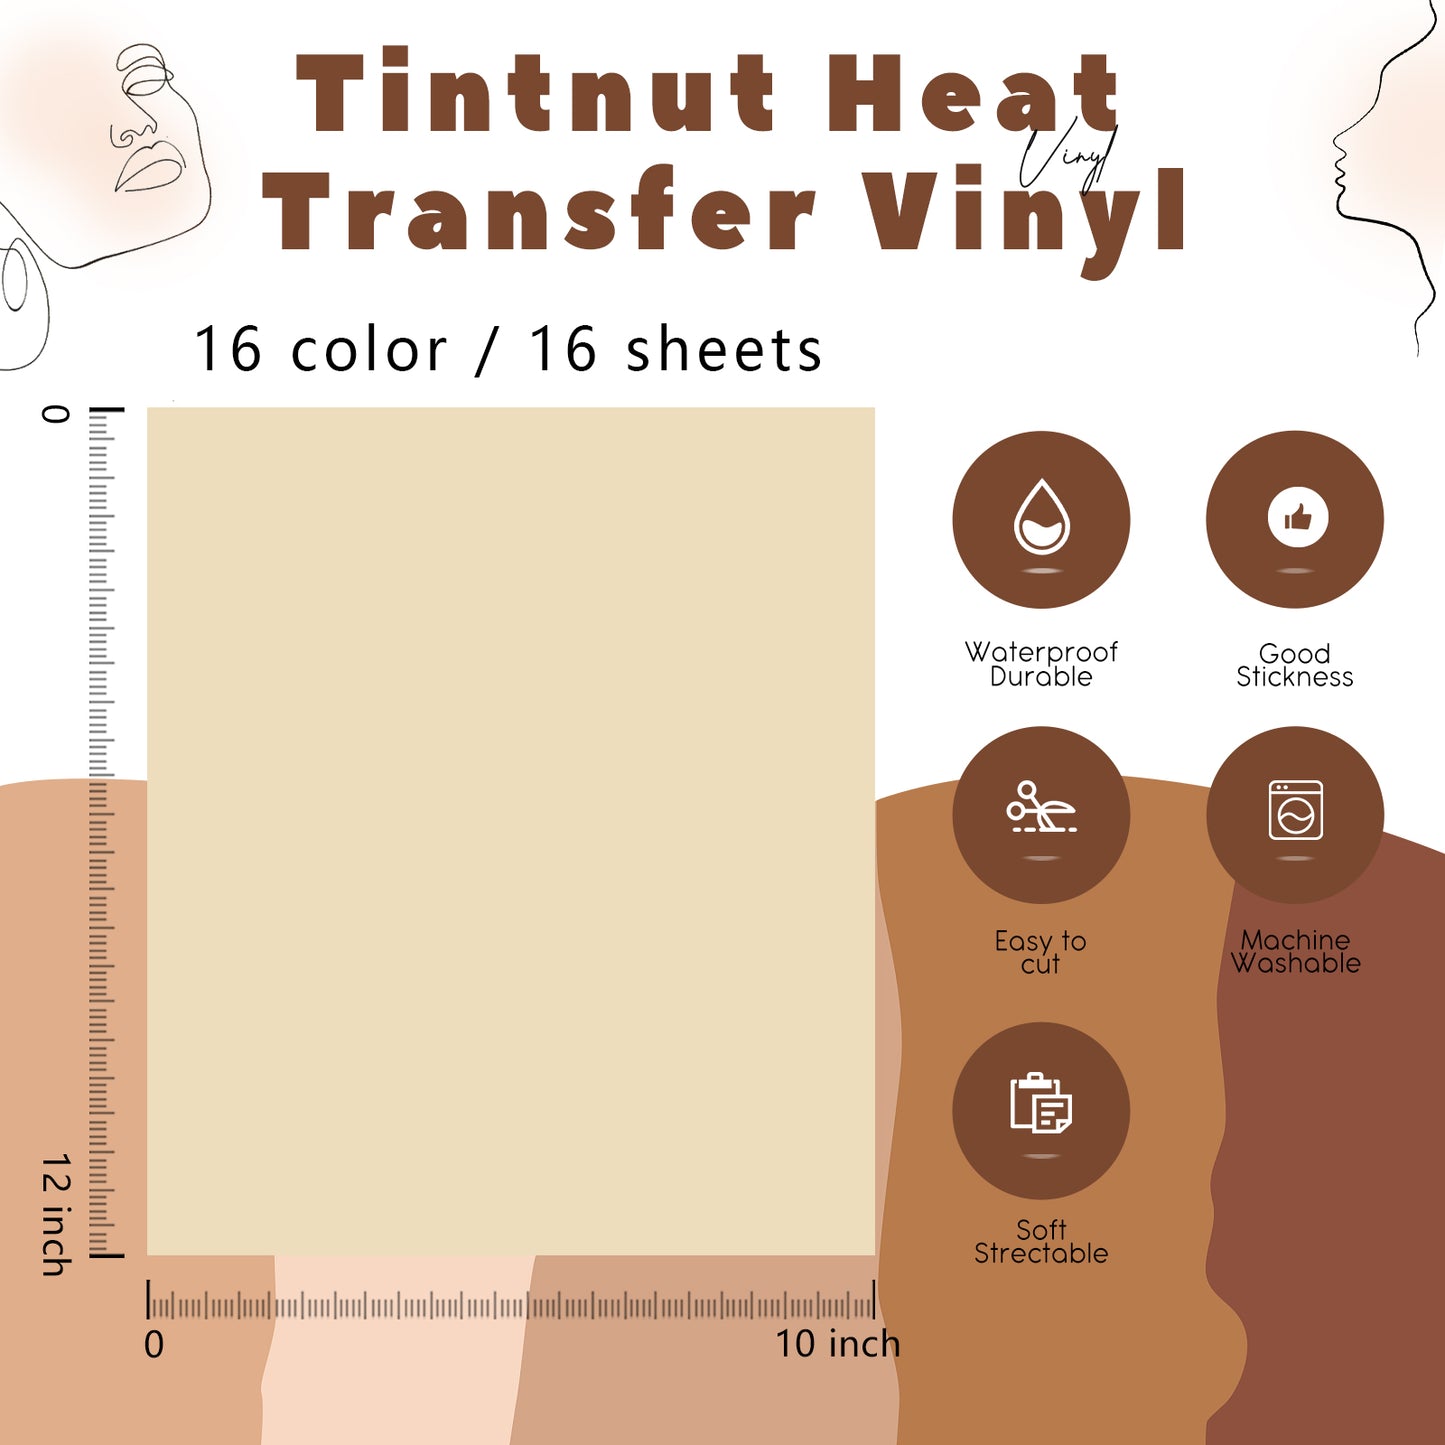 HTV Vinyl | Iron on Vinyl Sheets Bundle Multi Color 12x 10 inch